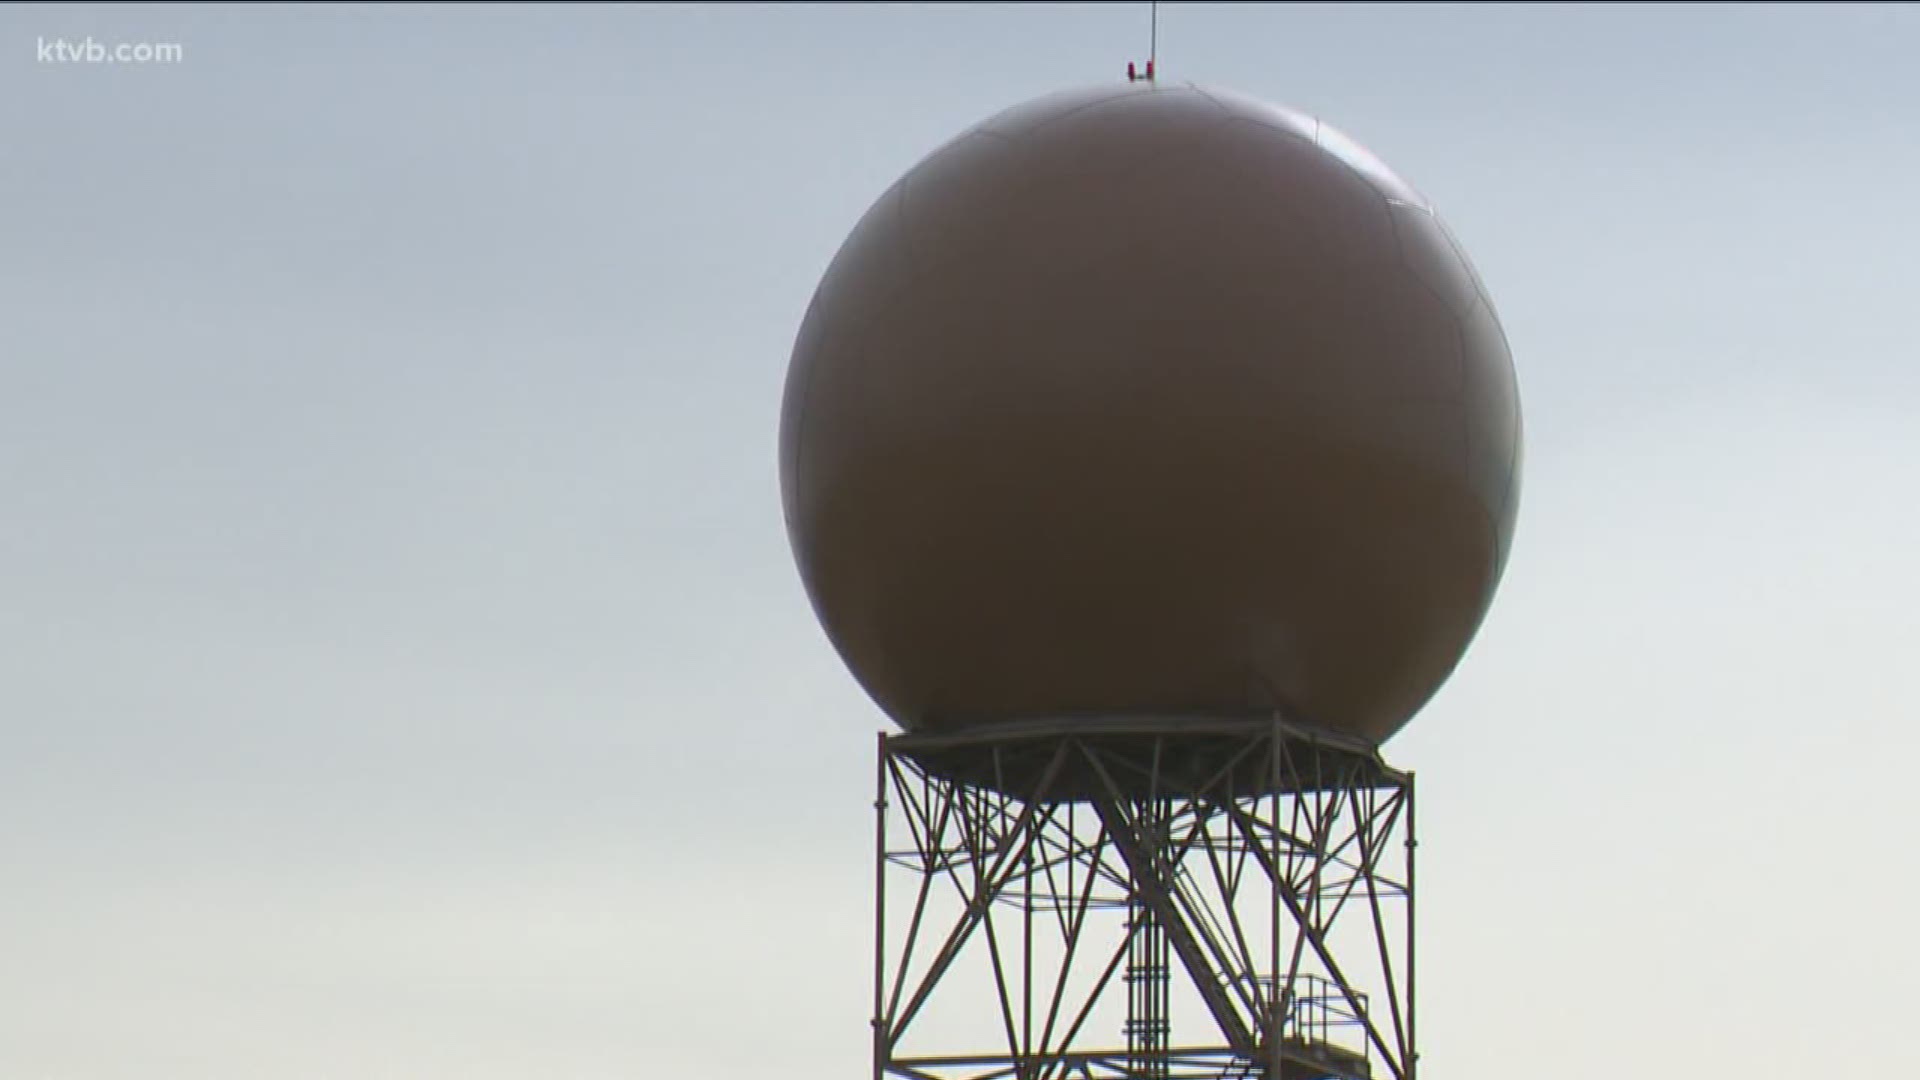 The radar's pedestal, which the radar antenna spins will take three weeks to be refurbished.